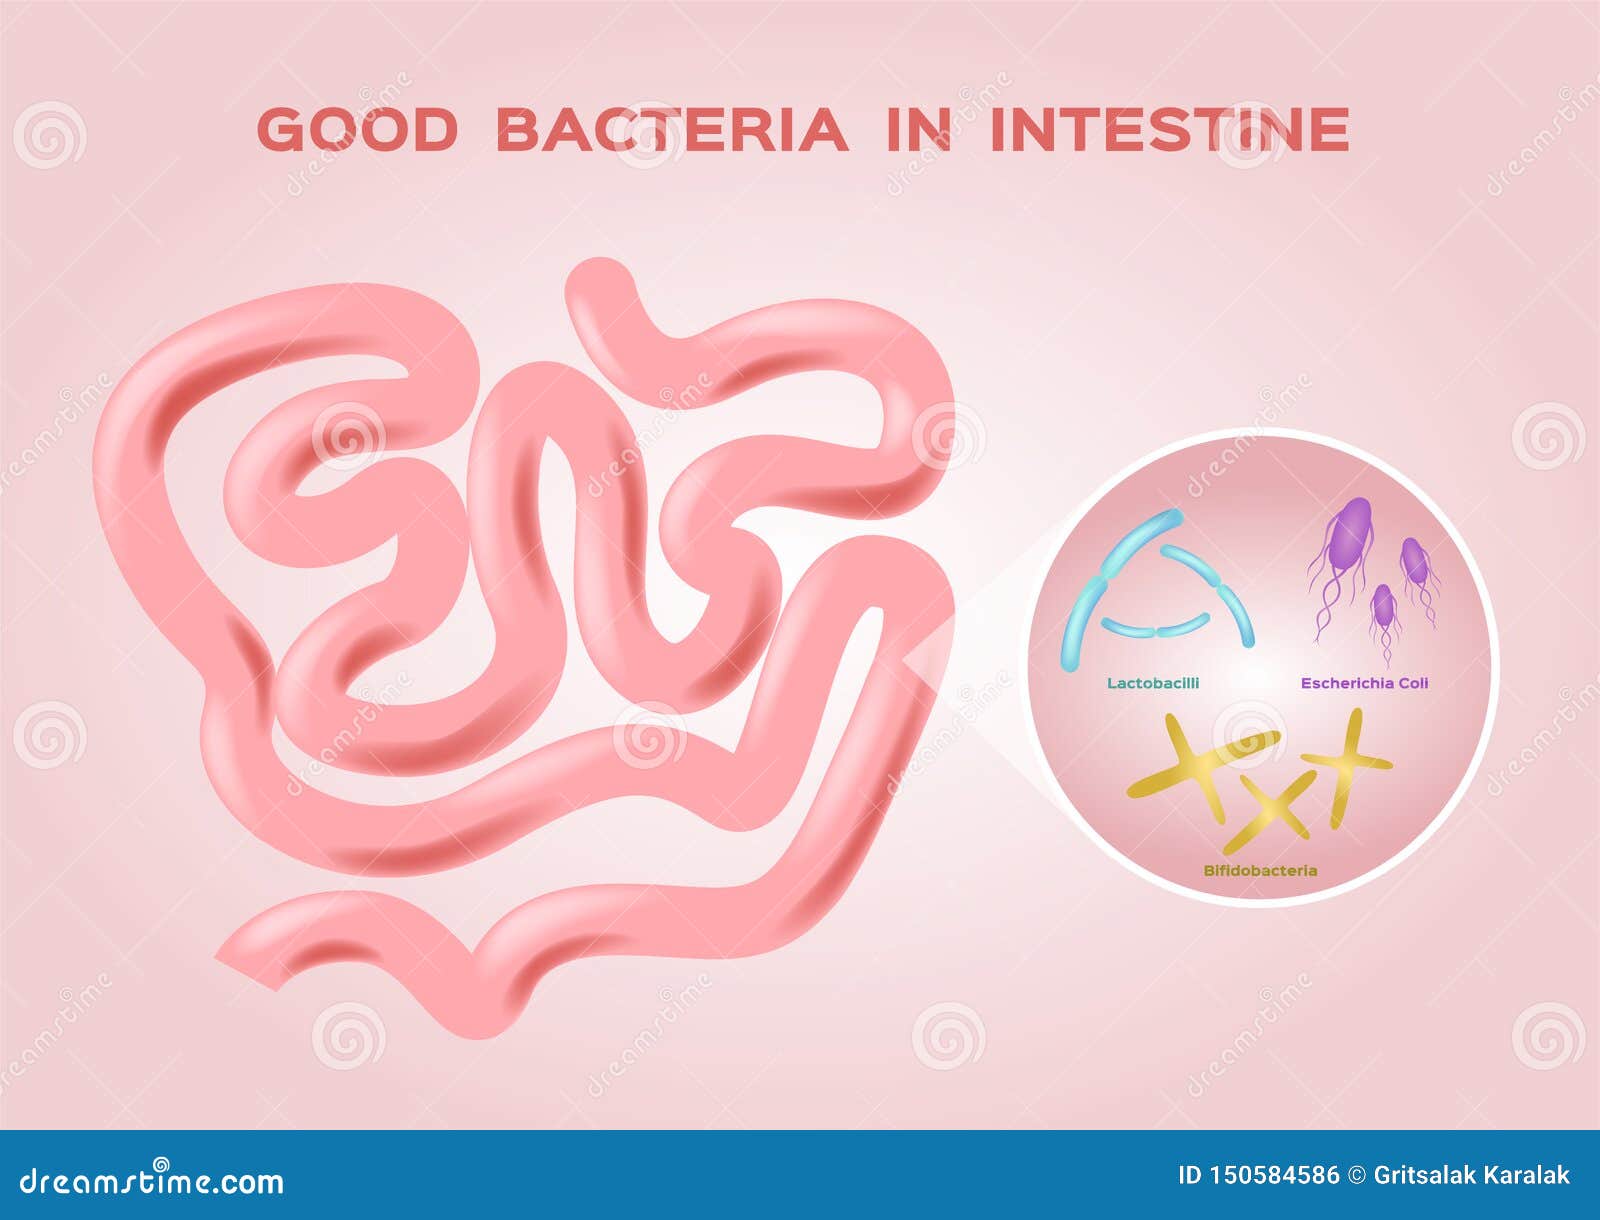 Good Bacteria And Bad Bacteria Cartoon Characters | CartoonDealer.com